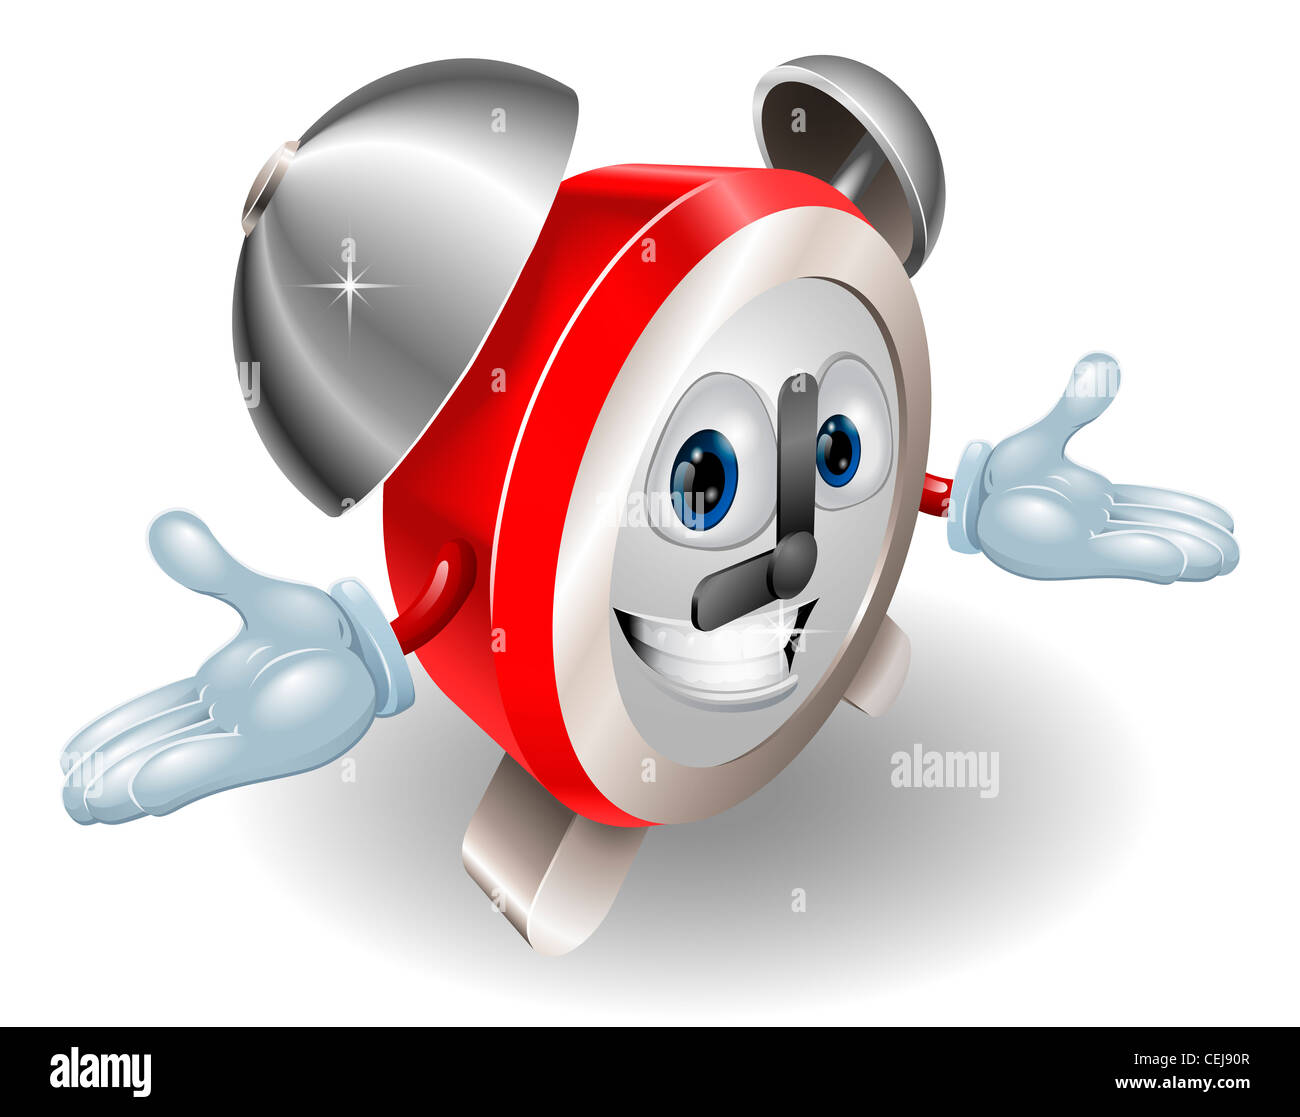 Alarm clock character illustration Stock Photo